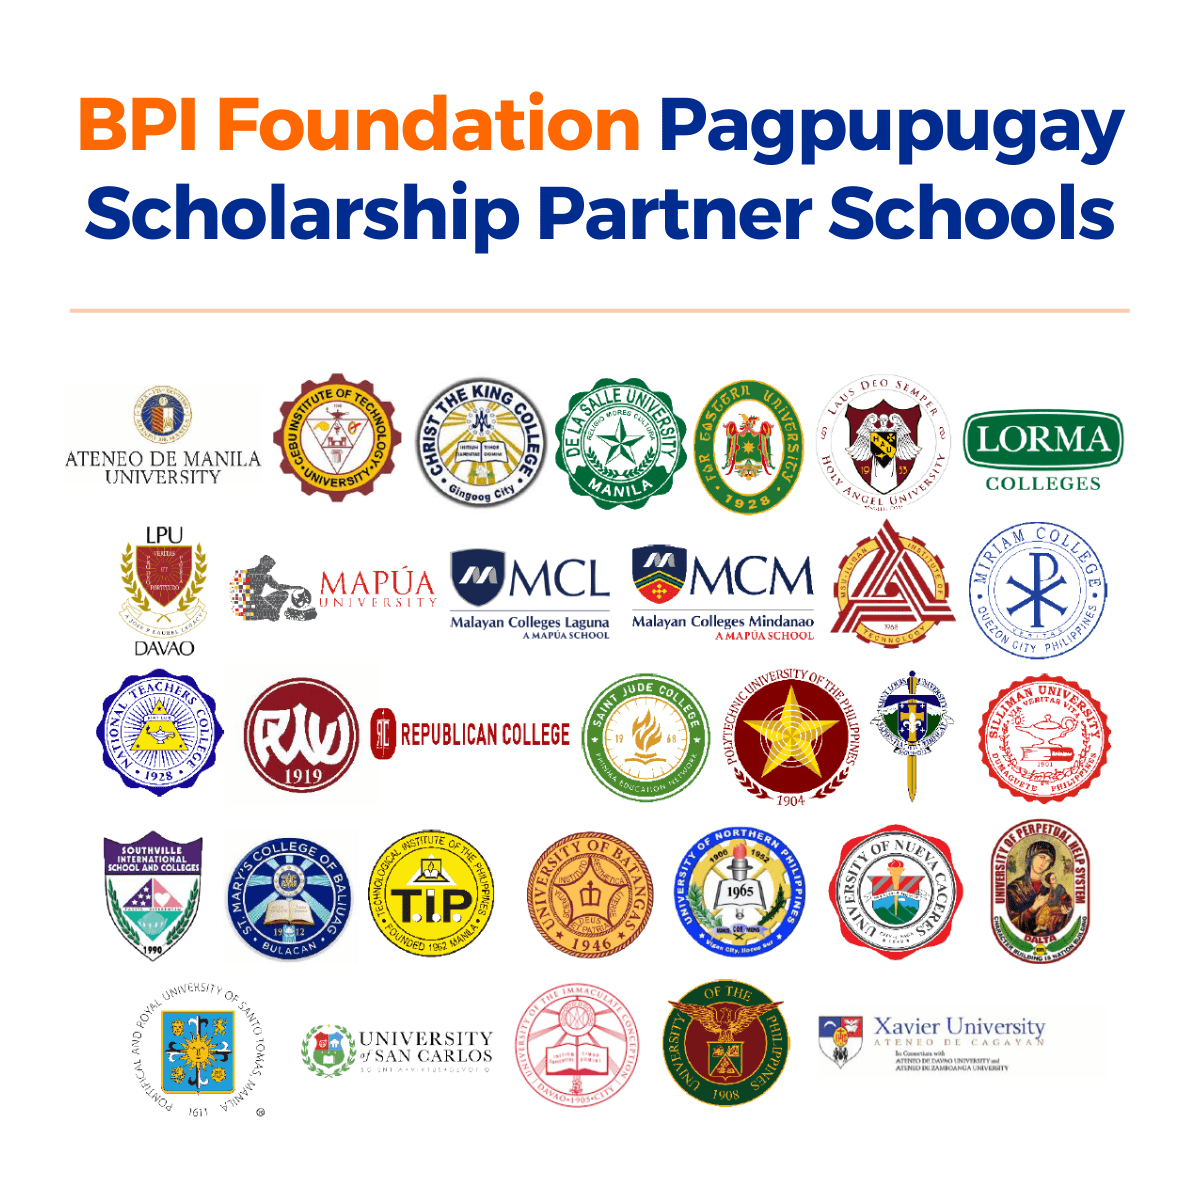 BPI Foundation Pagpupugay Scholarship Partner Schools